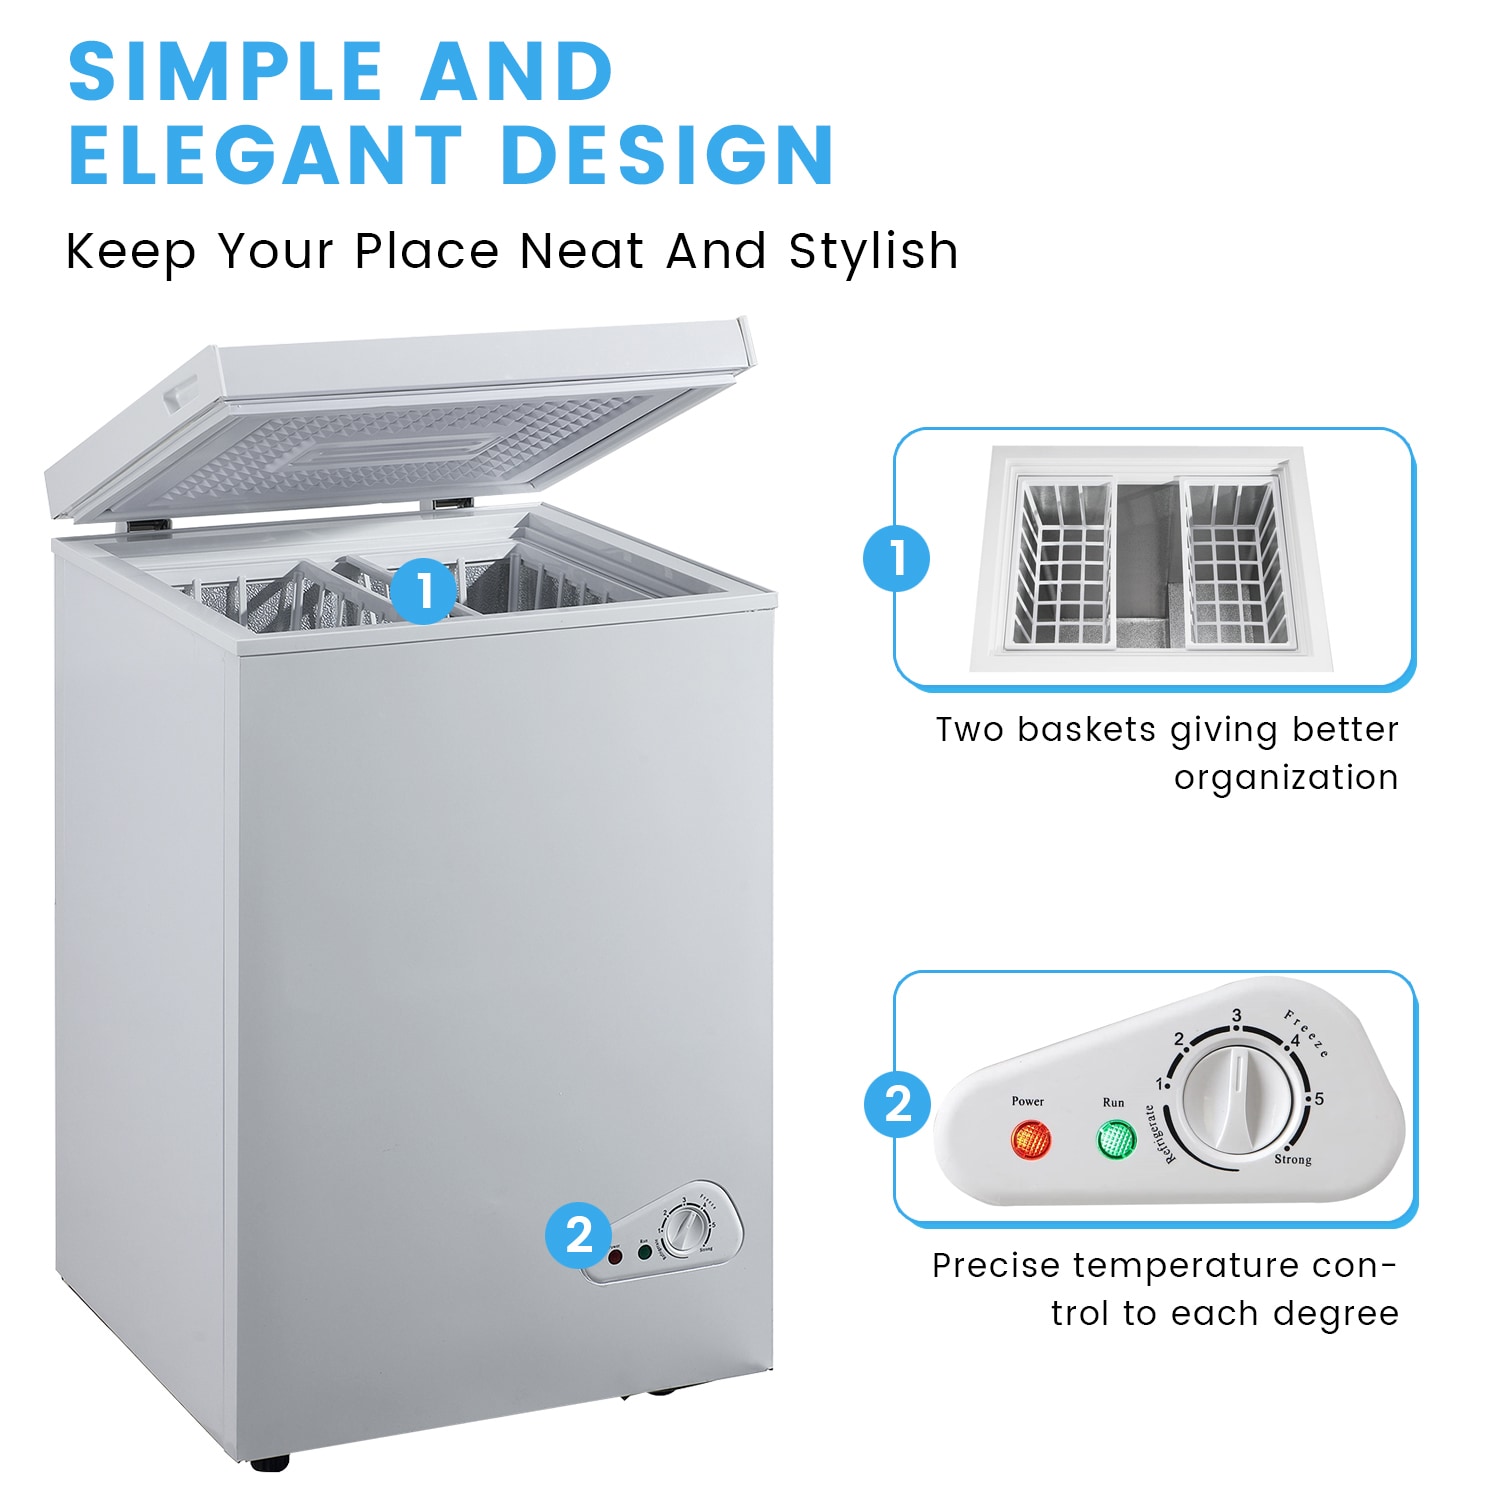 Compact Chest Freezer, 3.5 cu ft (99L), White, Manual Defrost Deep Freeze,  Storage - Refrigerators & Freezers, Facebook Marketplace